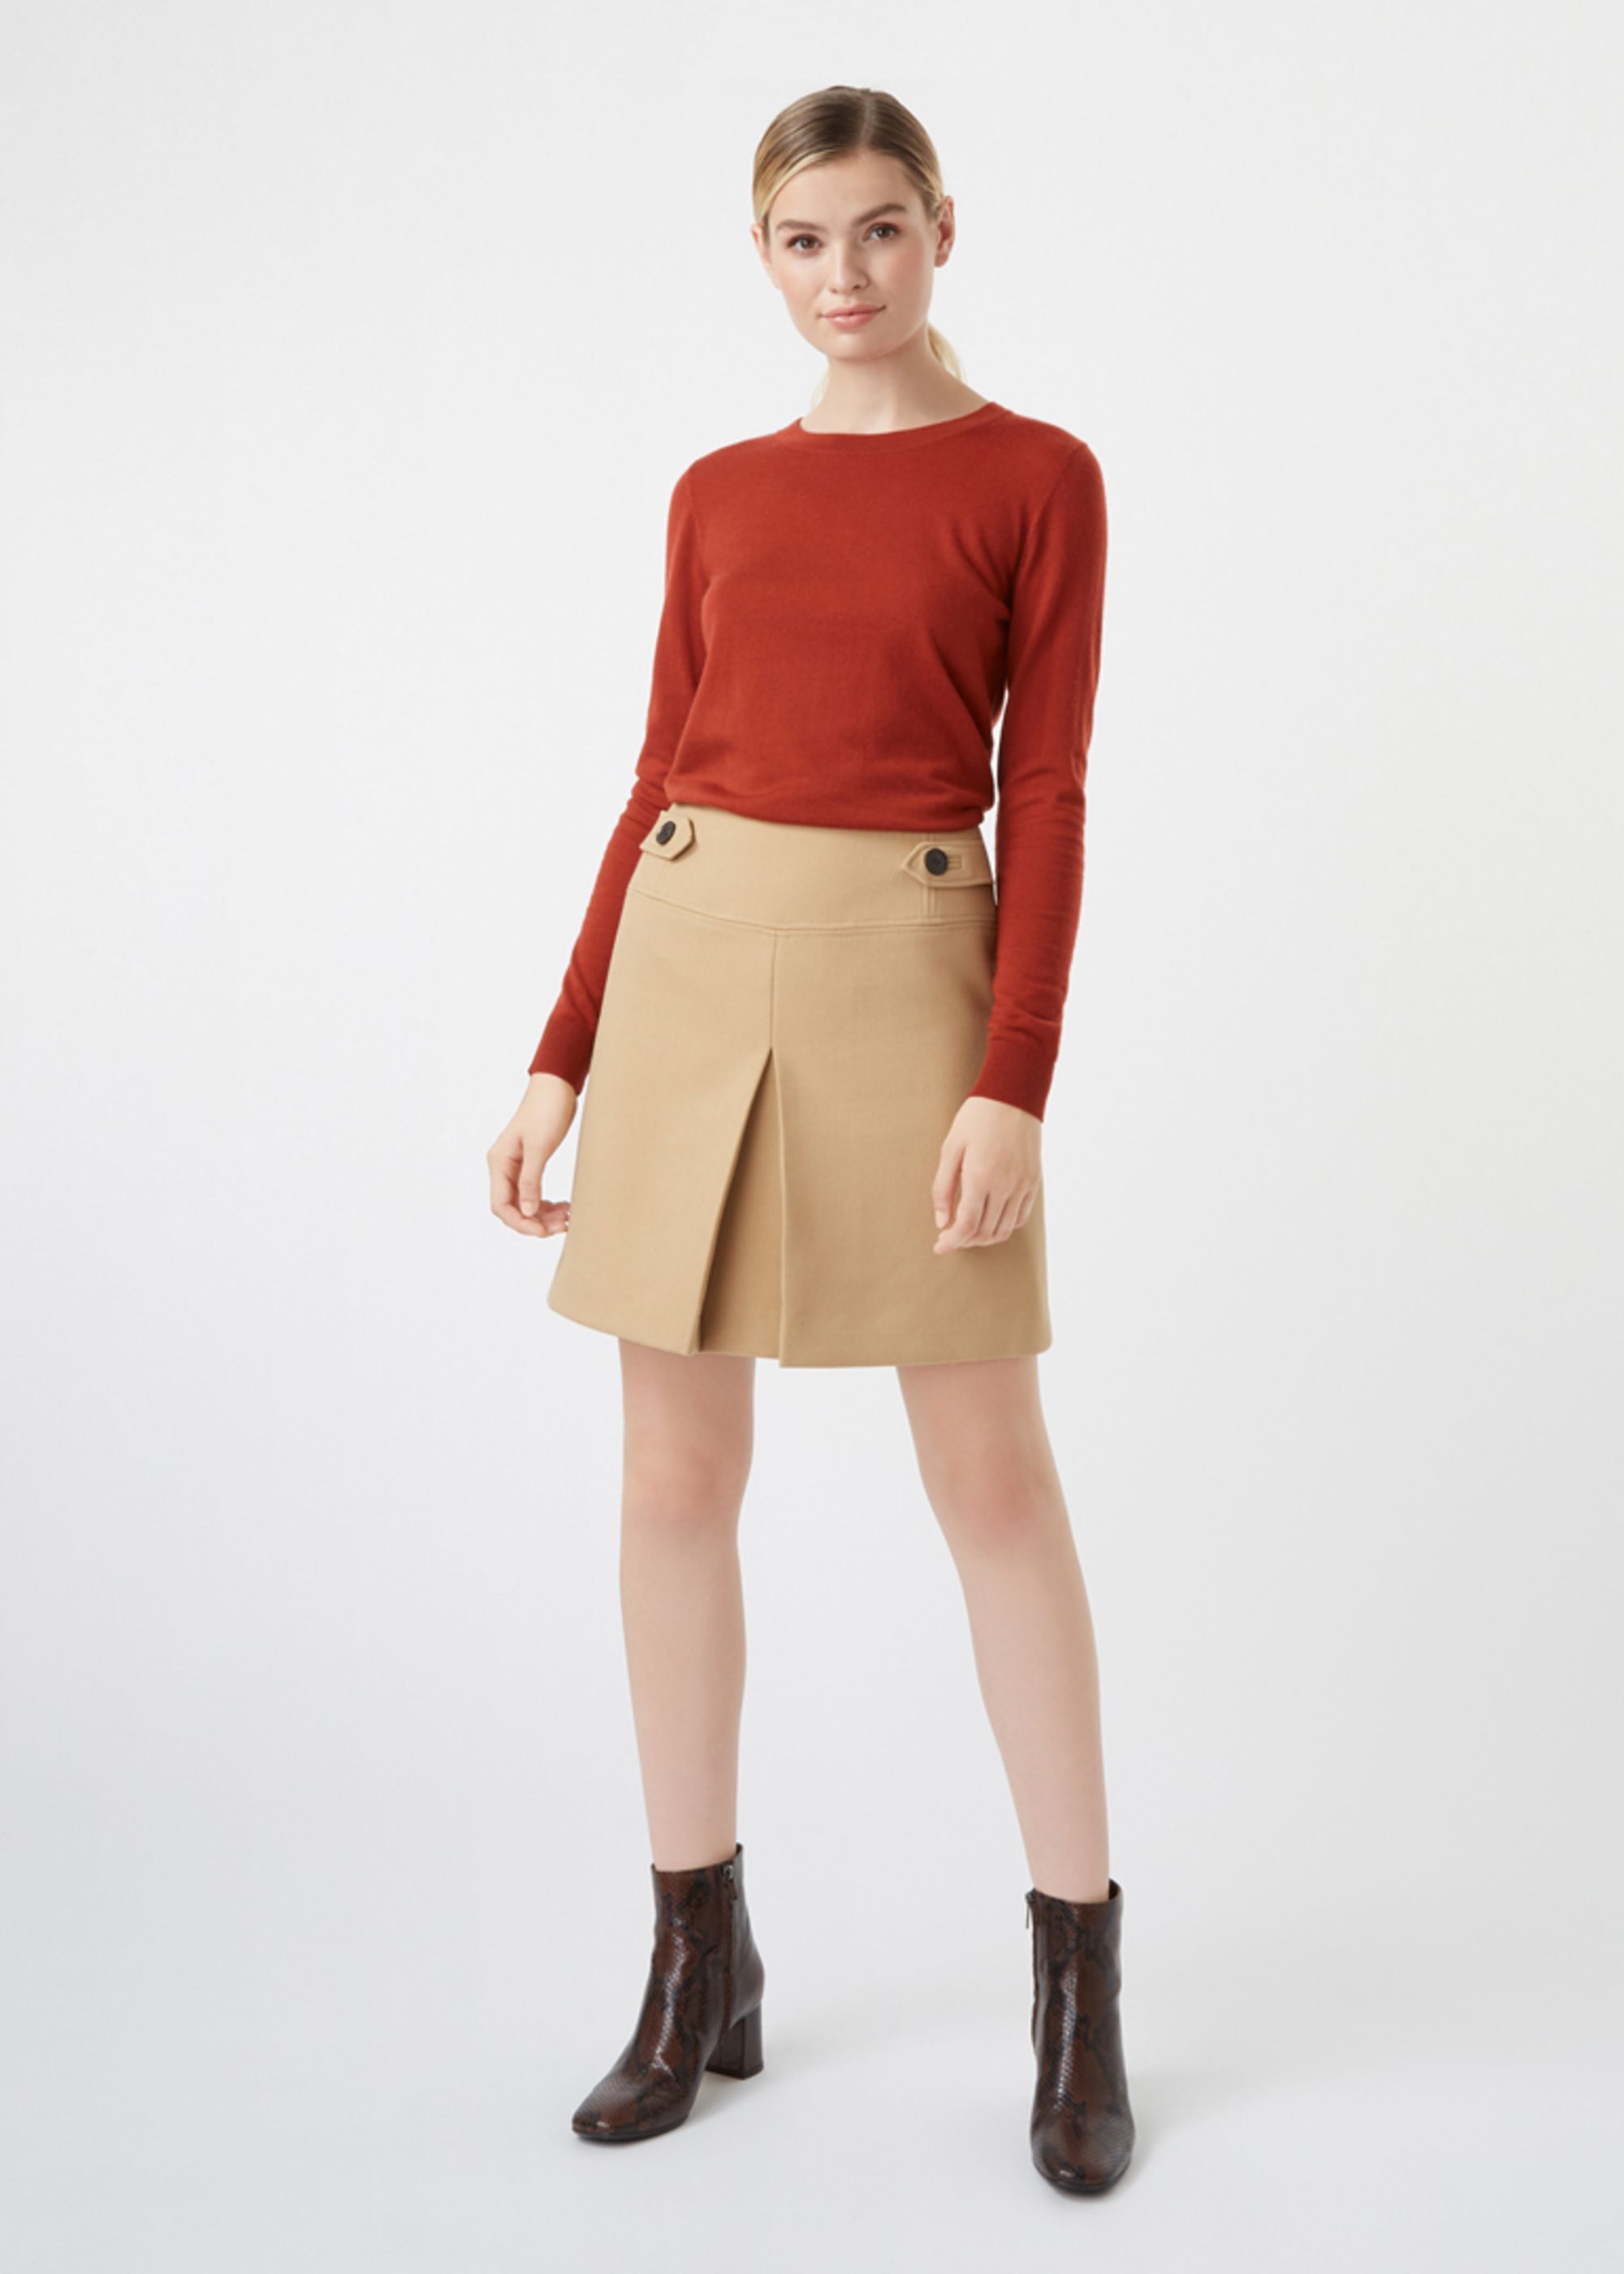 hobbs brown leather skirt